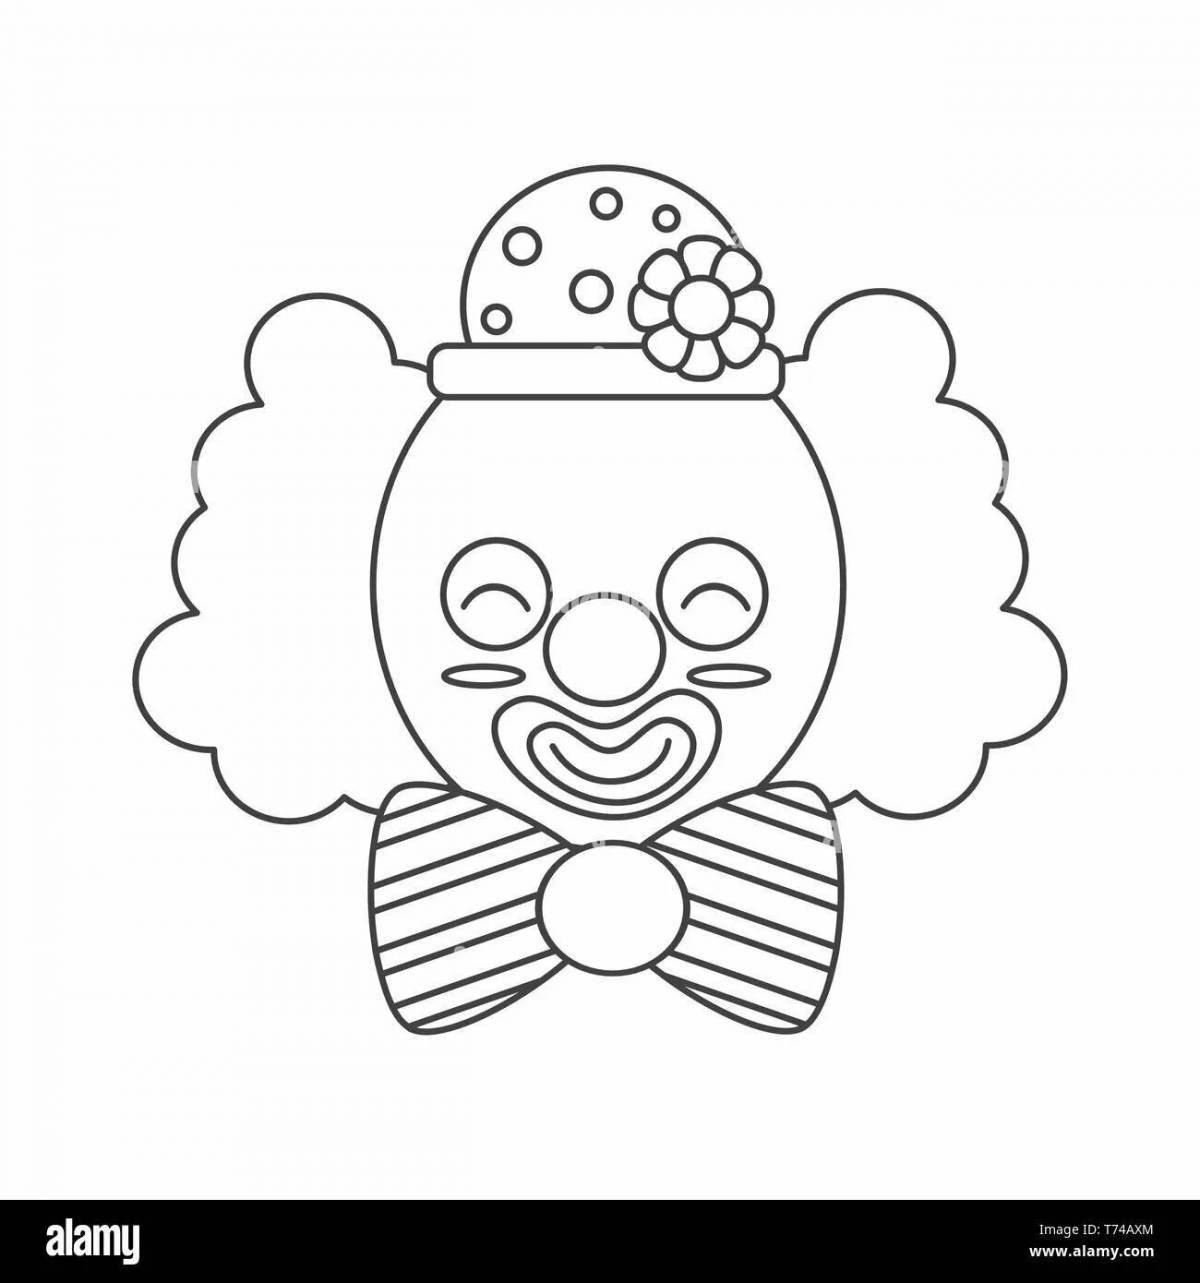 Colored shiny clown head coloring book